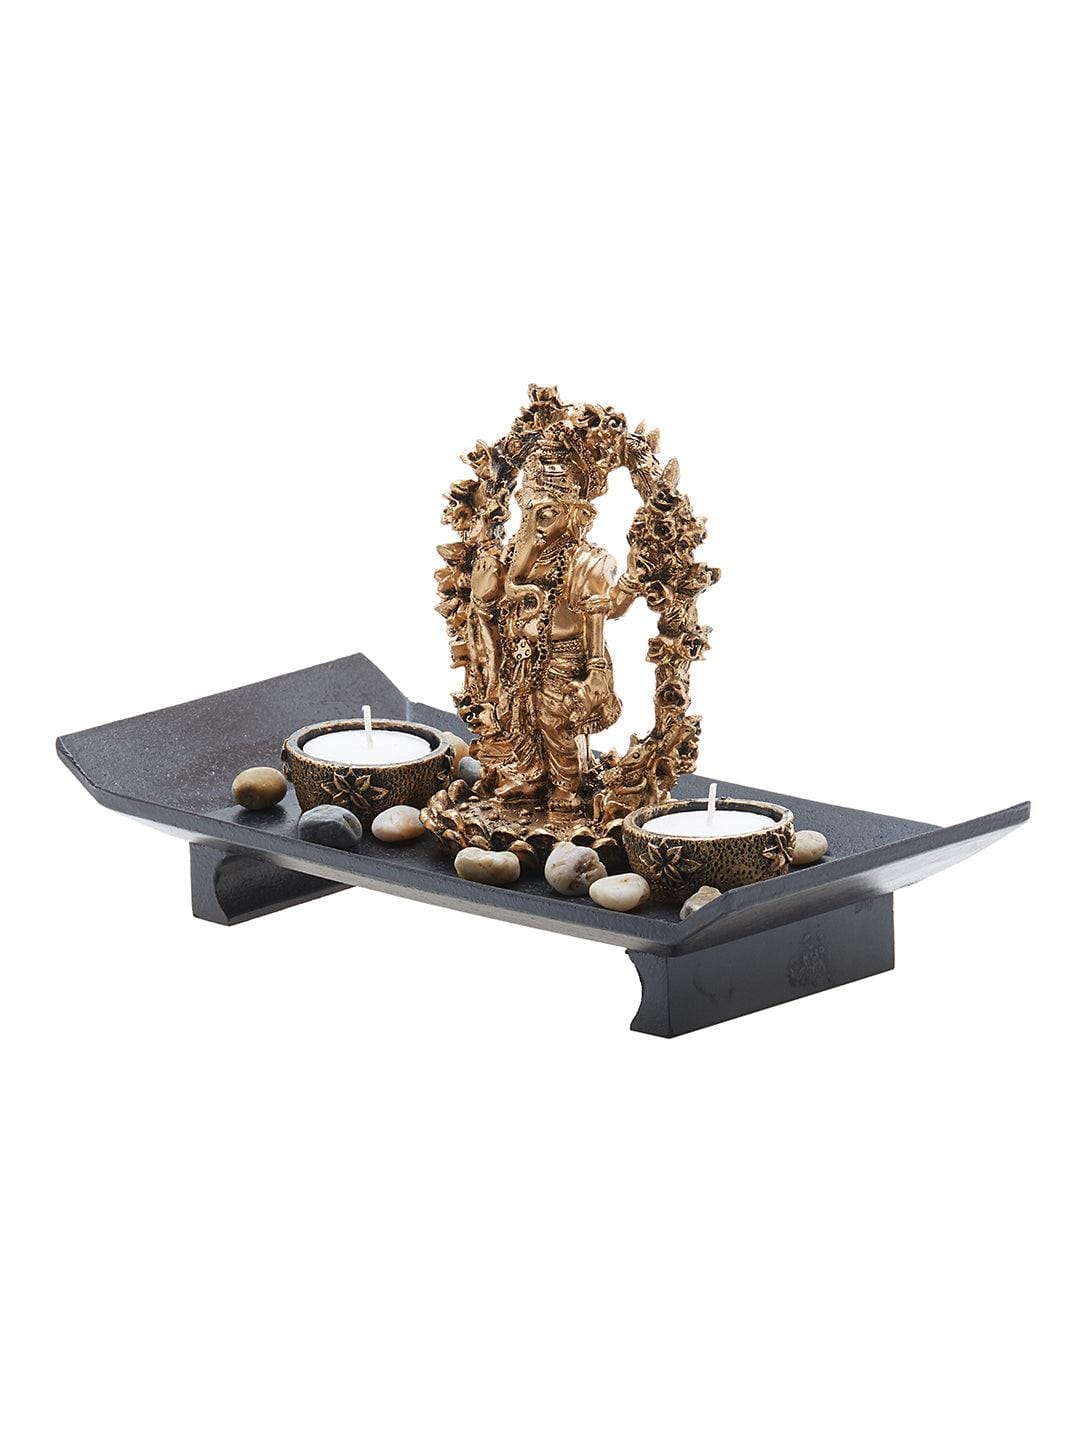 Lord Ganesha Gift Set Tray with 2 Tea Lights (Golden)